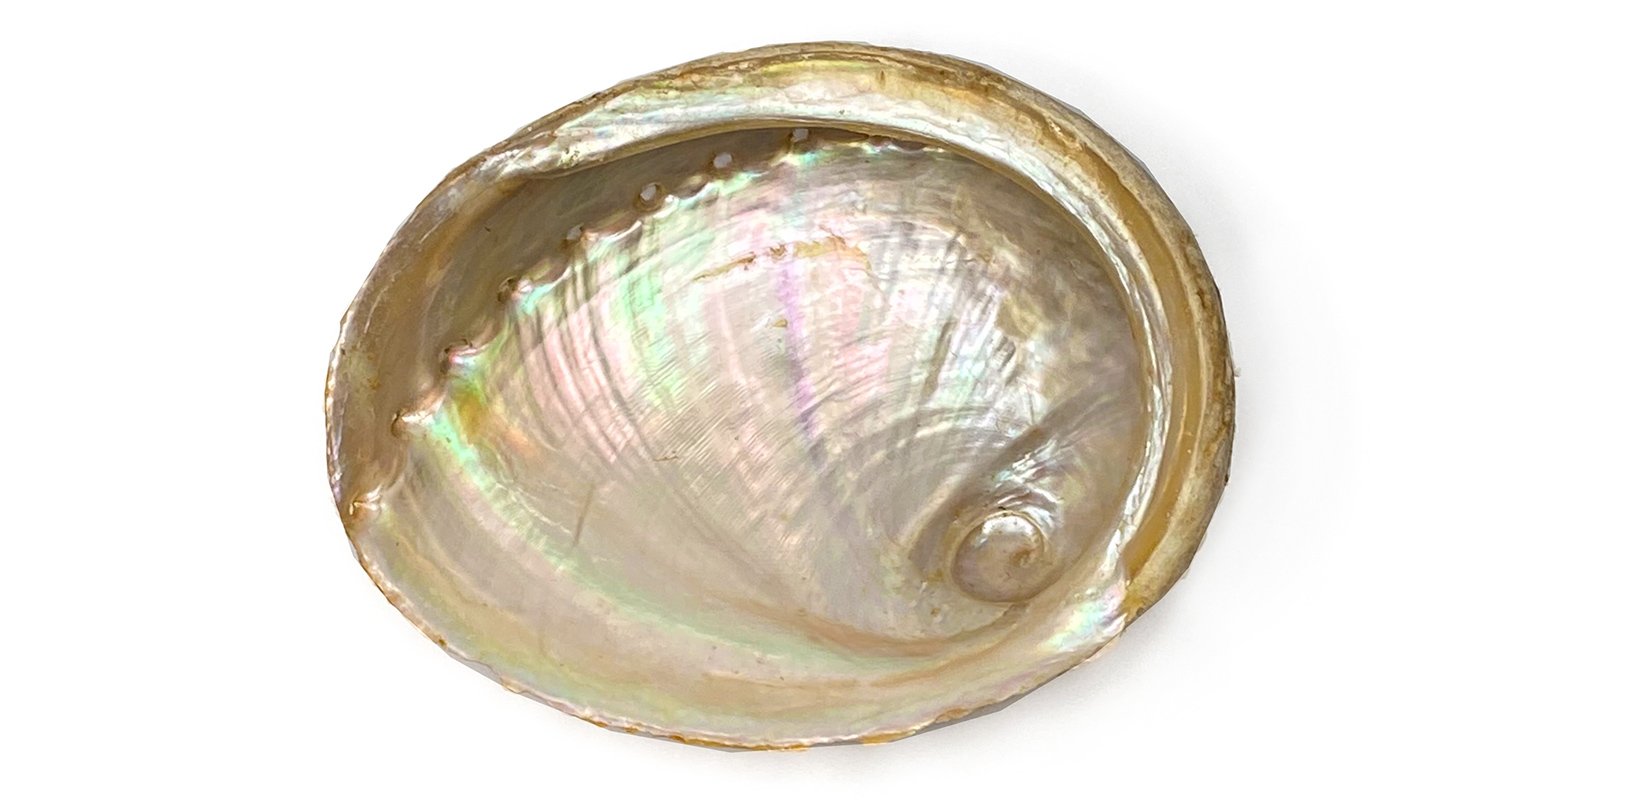 Abalone-Muschel Räucherschale Abalone Haliotis diversicolor